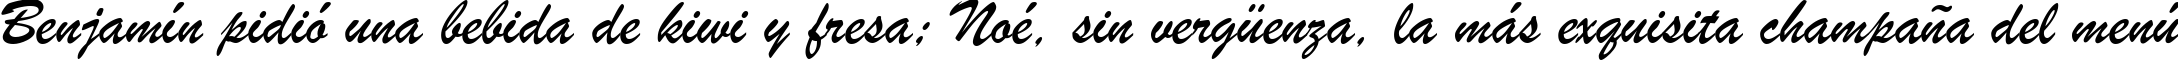 Пример написания шрифтом Brush Script MT Italic текста на испанском